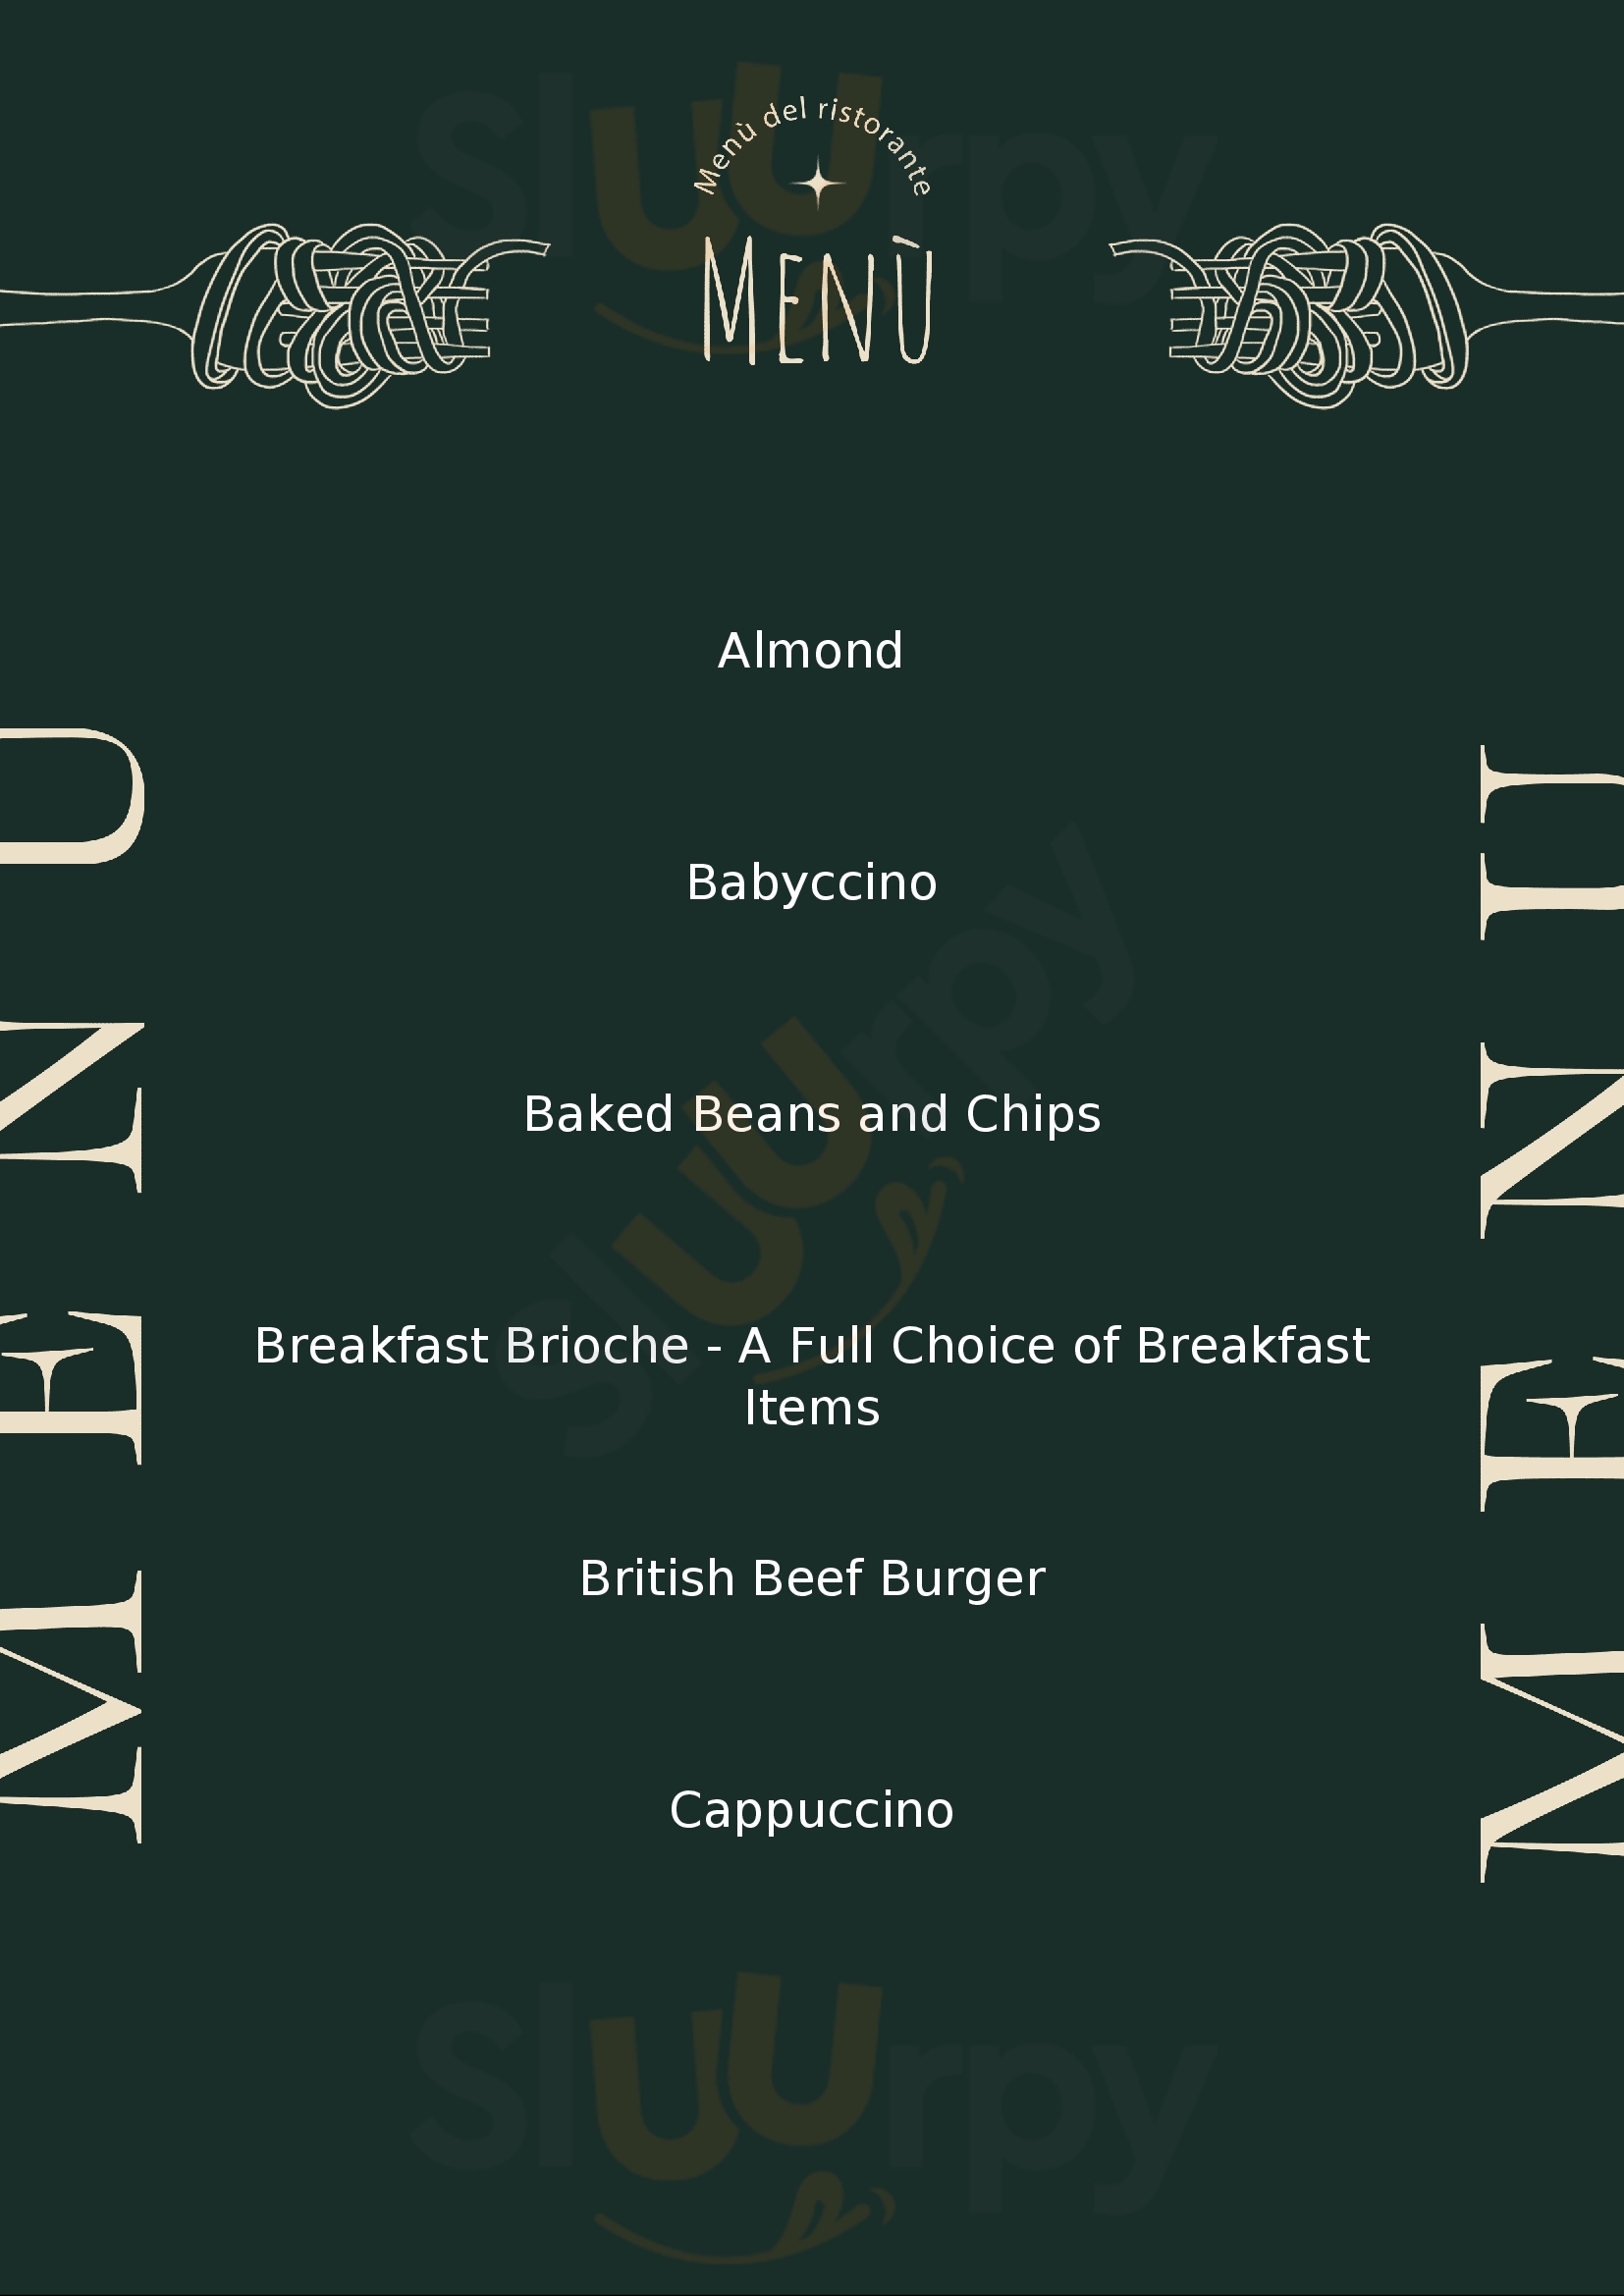 Tasty Bean Cafe Watford Menu - 1